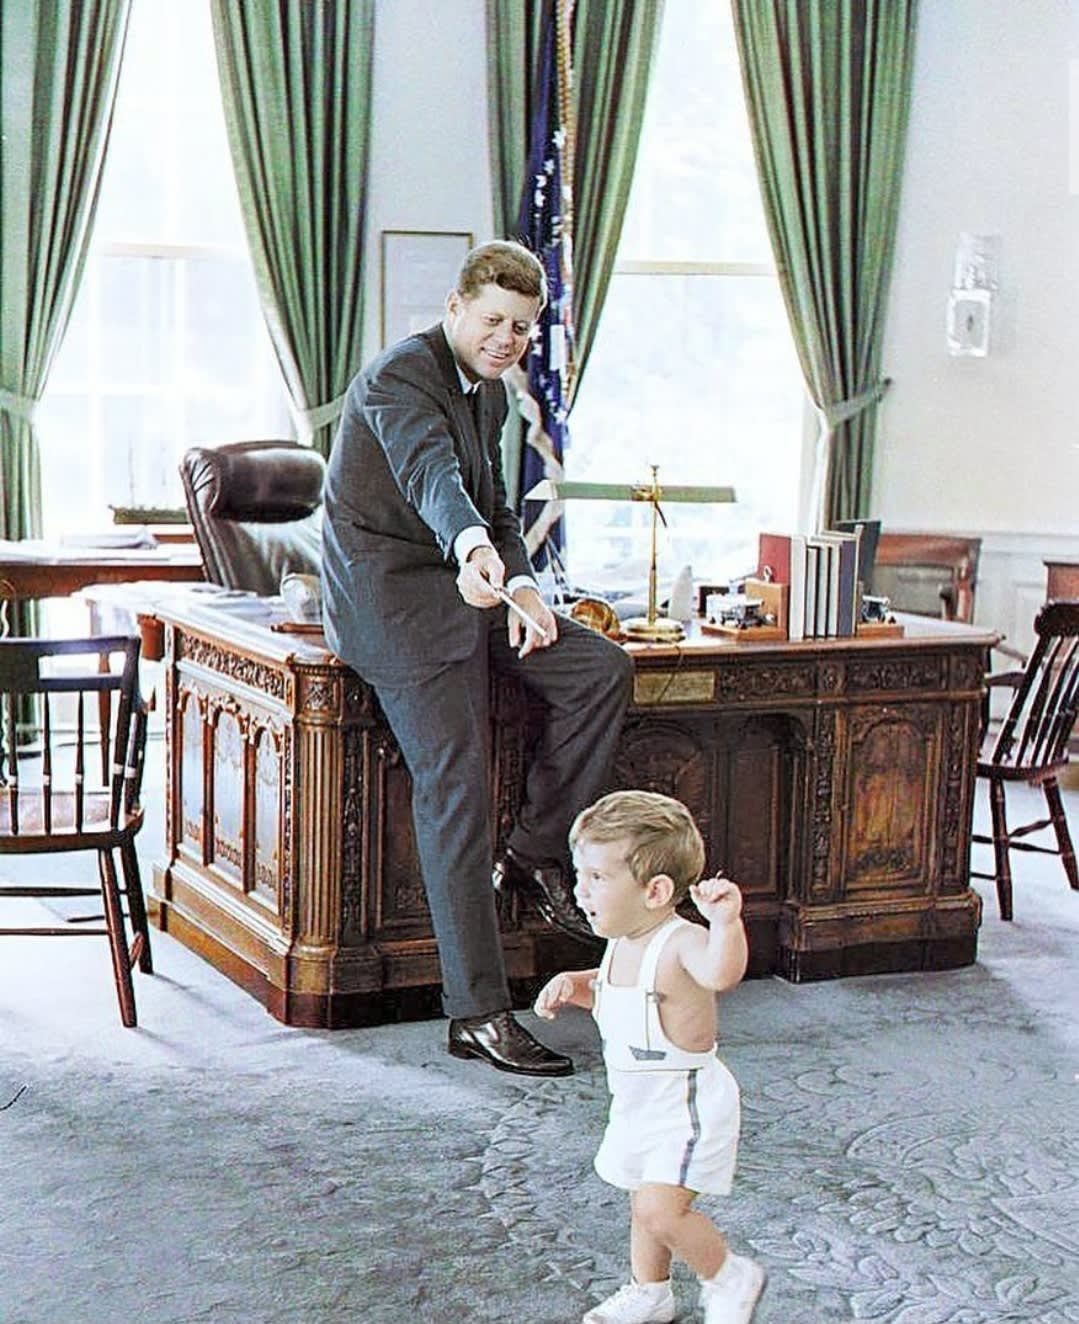 PsBattle: JFK and JFK Jr. Oval Office